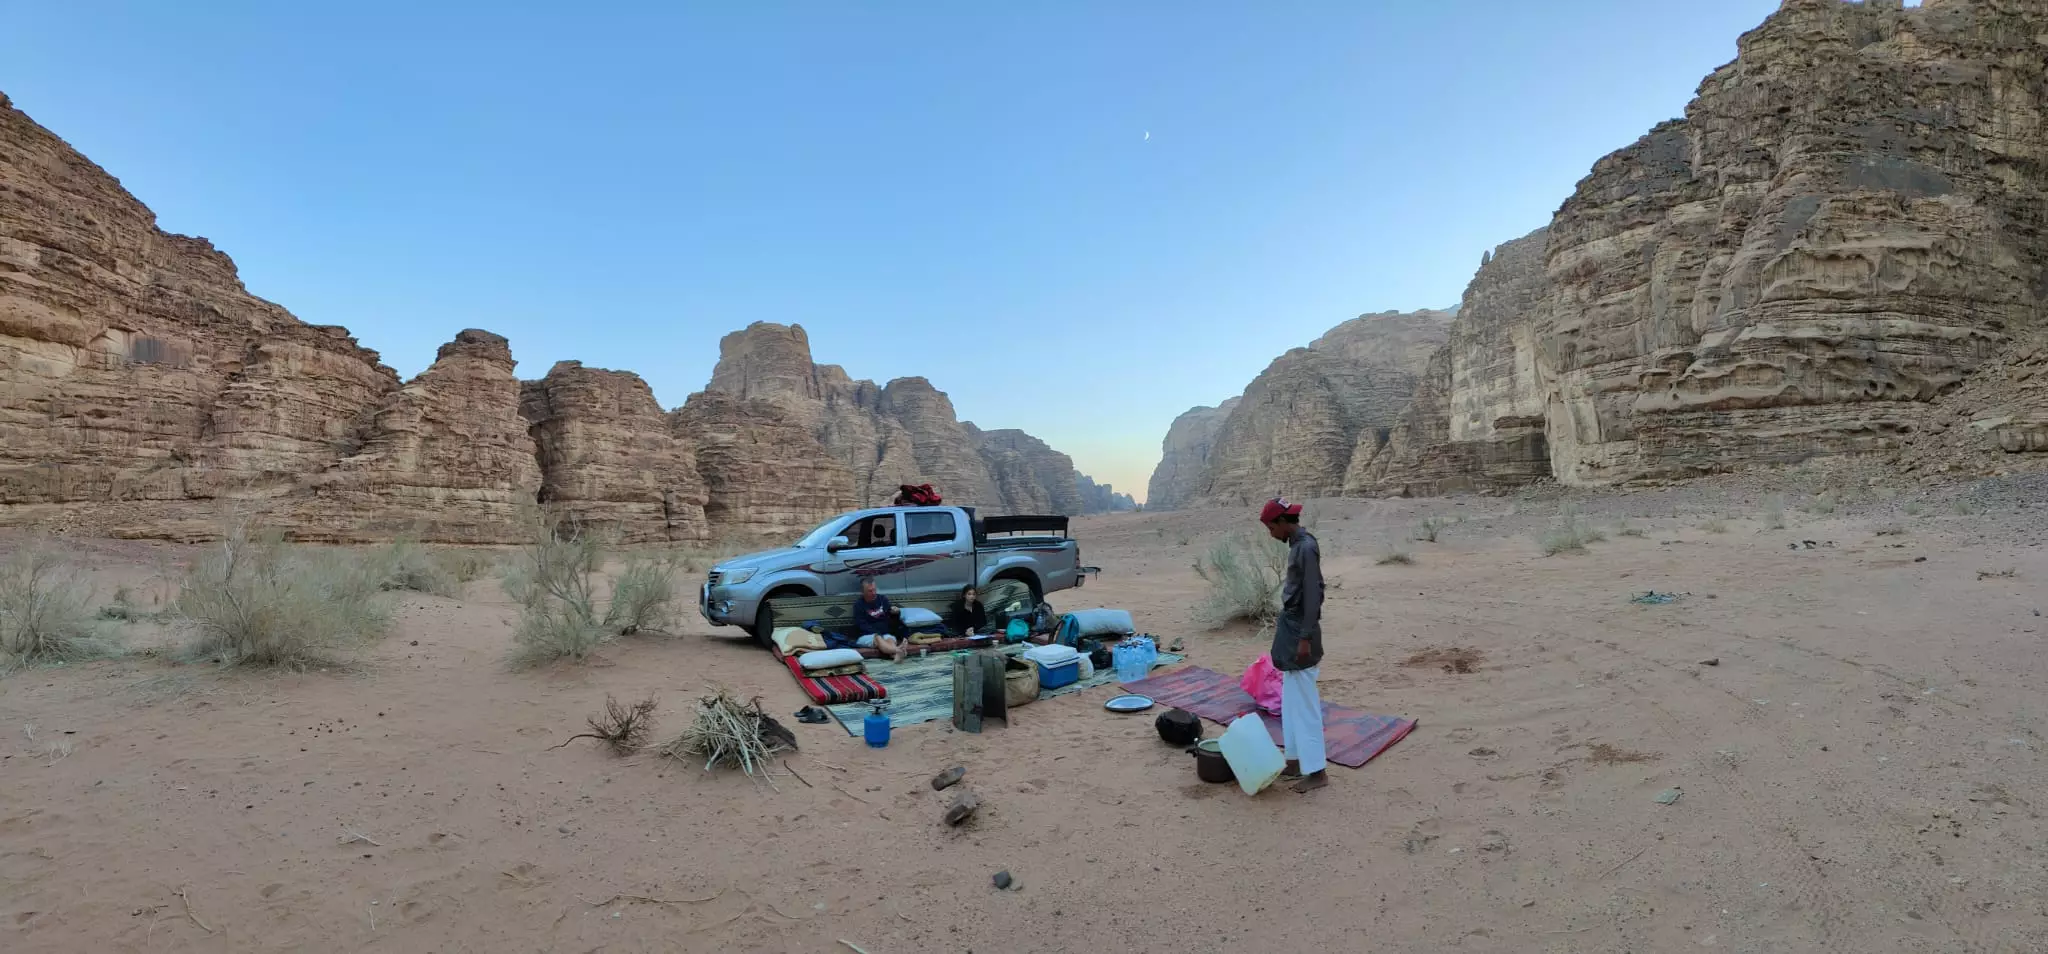 Trek Adventure in Wadi Rum